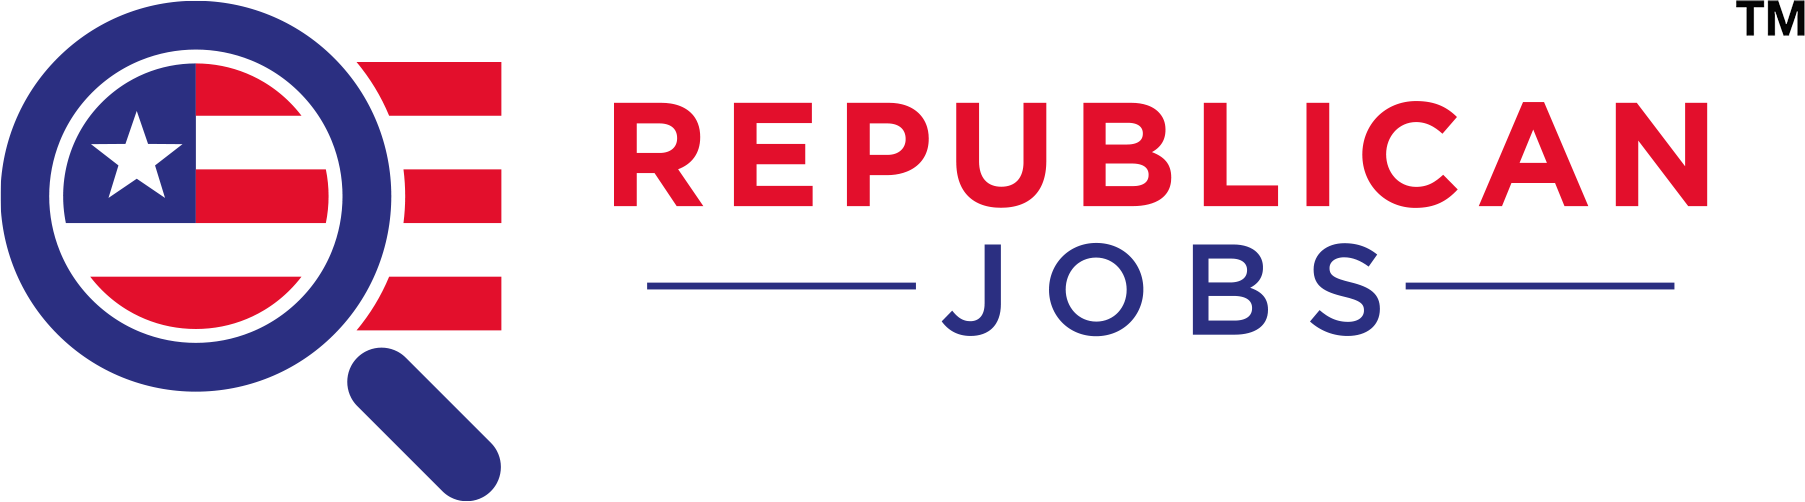 Republican jobs in Apple Valley California jobs